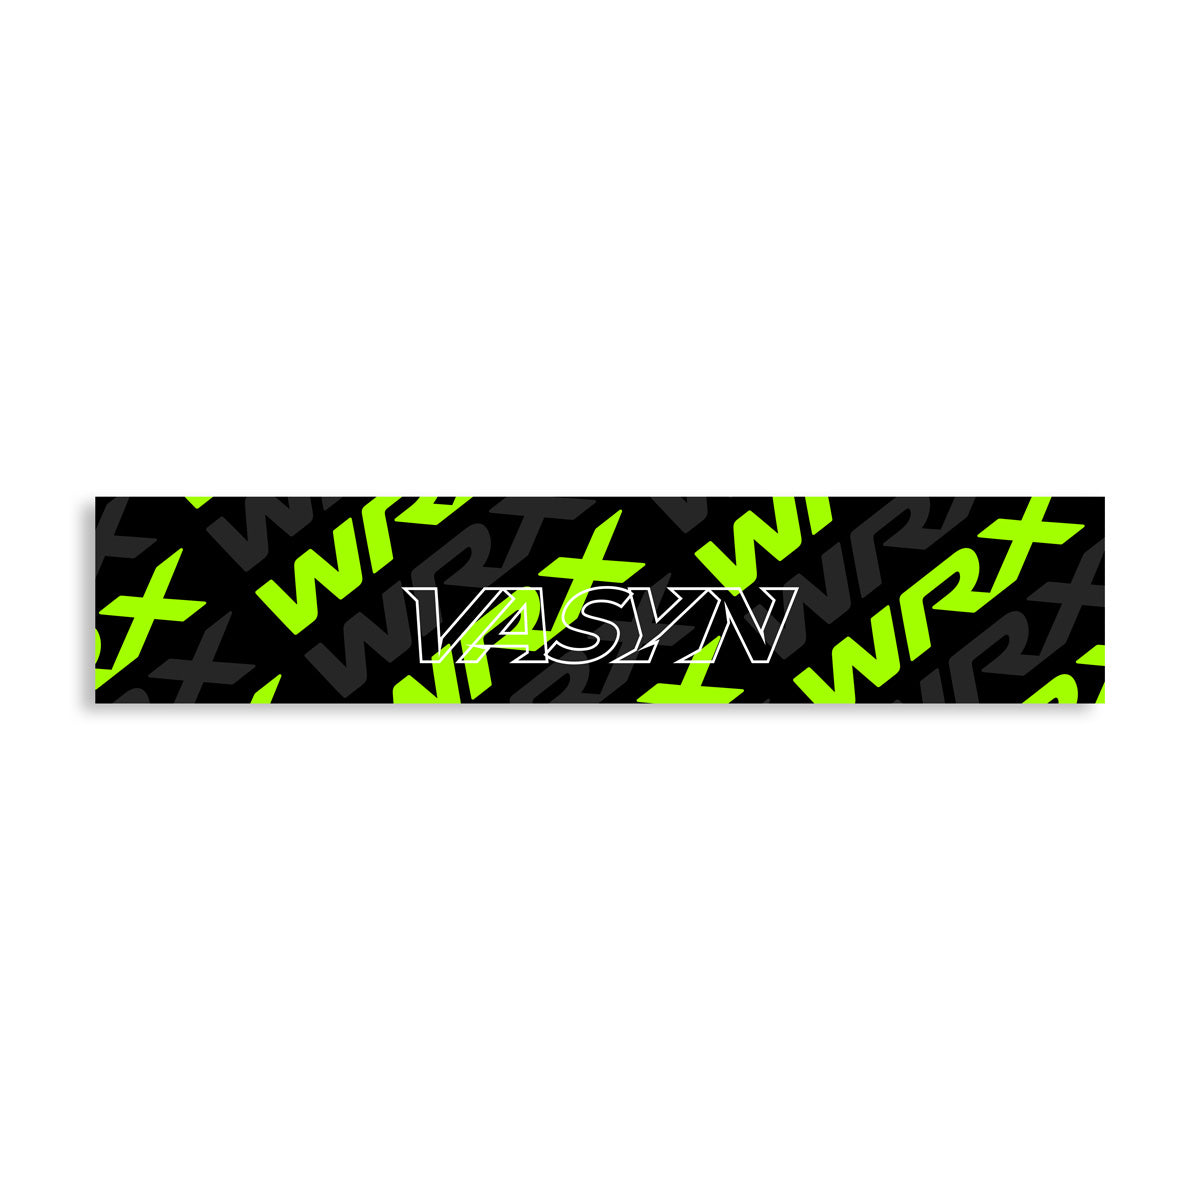 Vasyn x WRX Windshield Banner - Lime Green